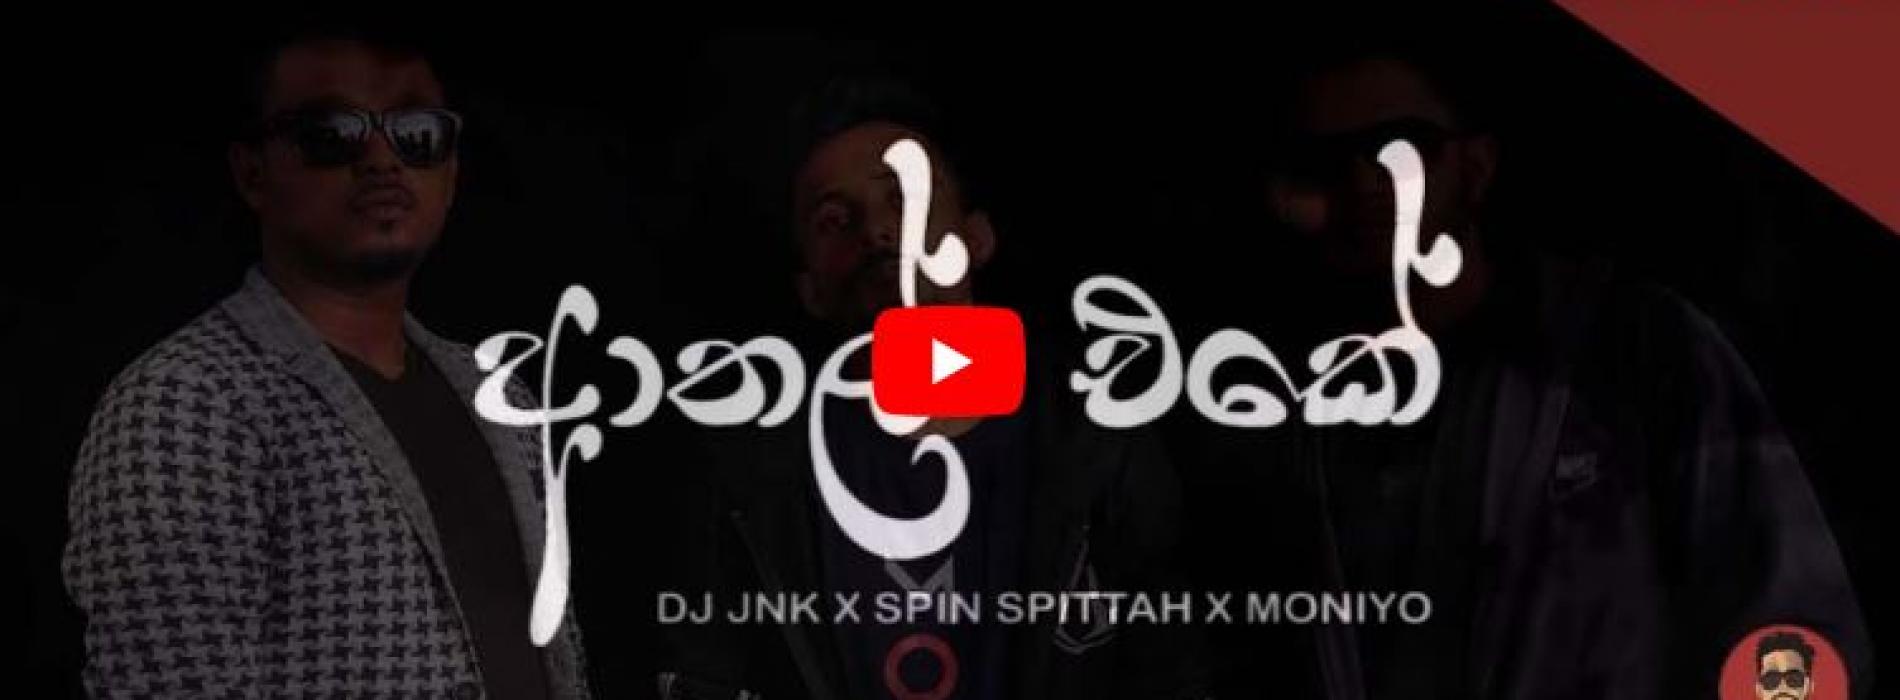 Athal Eke – ආතල් එකේ (Music Video) – DJ JNK ft Spin Spittah and Moniyo